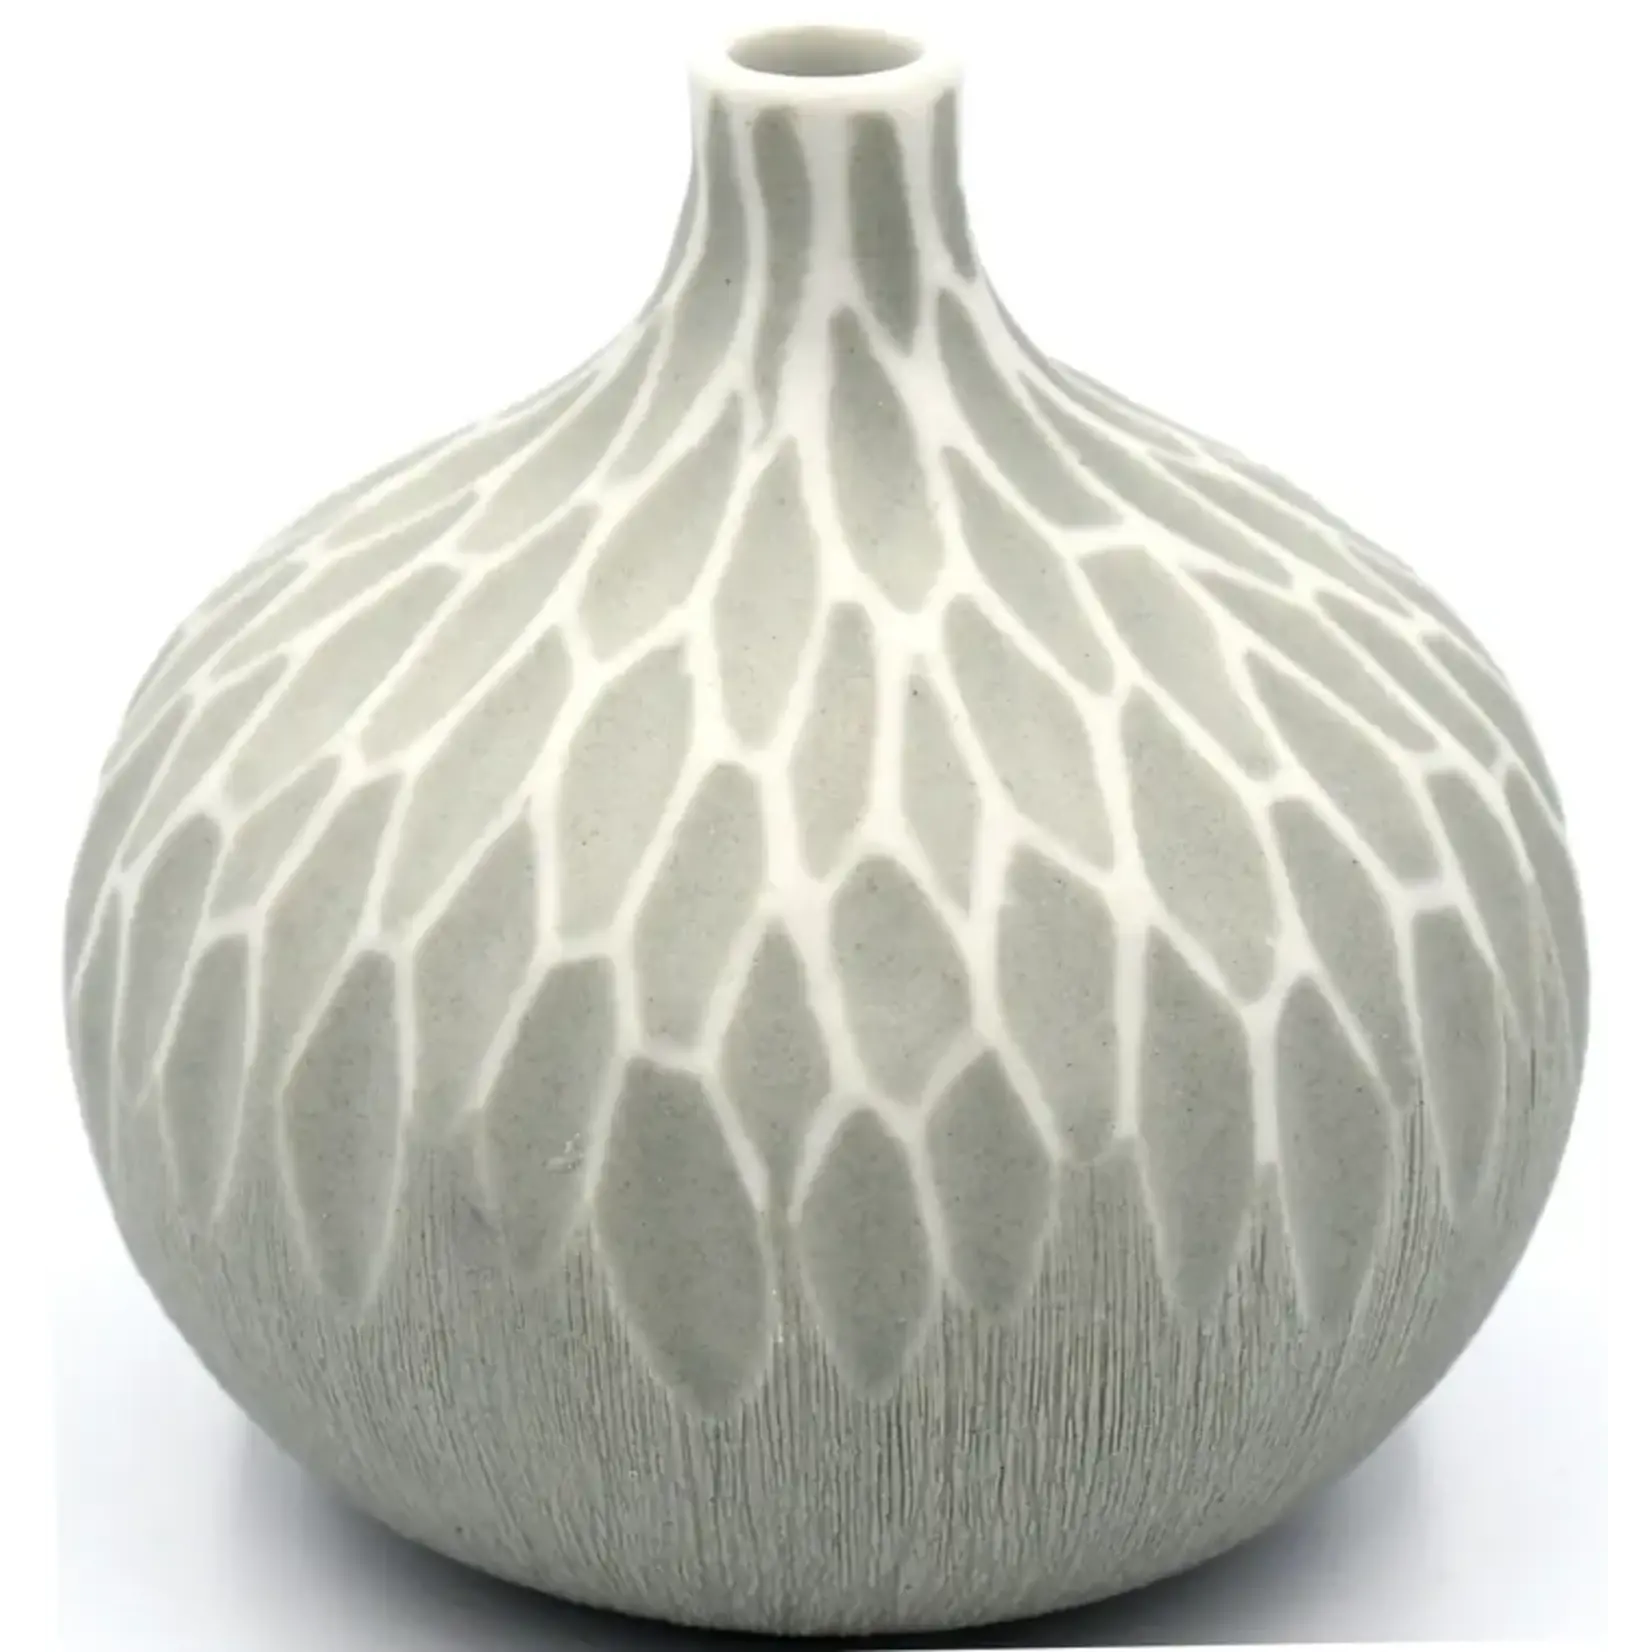 Congo Tiny Porcelain Bud Vase in W69 Grey